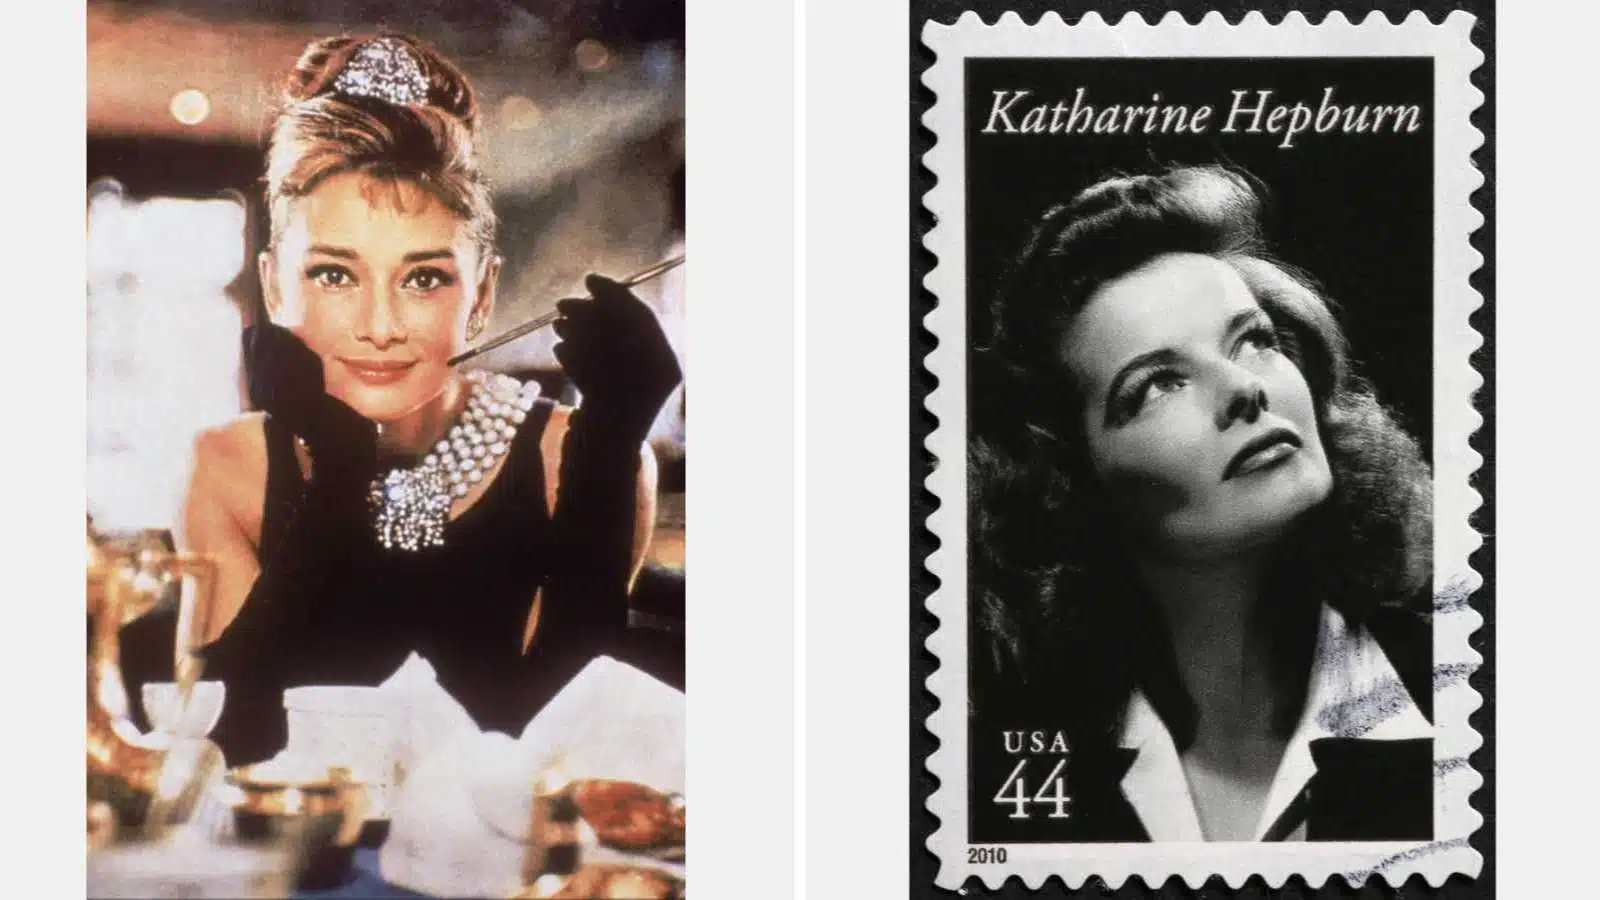 Audrey and Katharine Hepburn